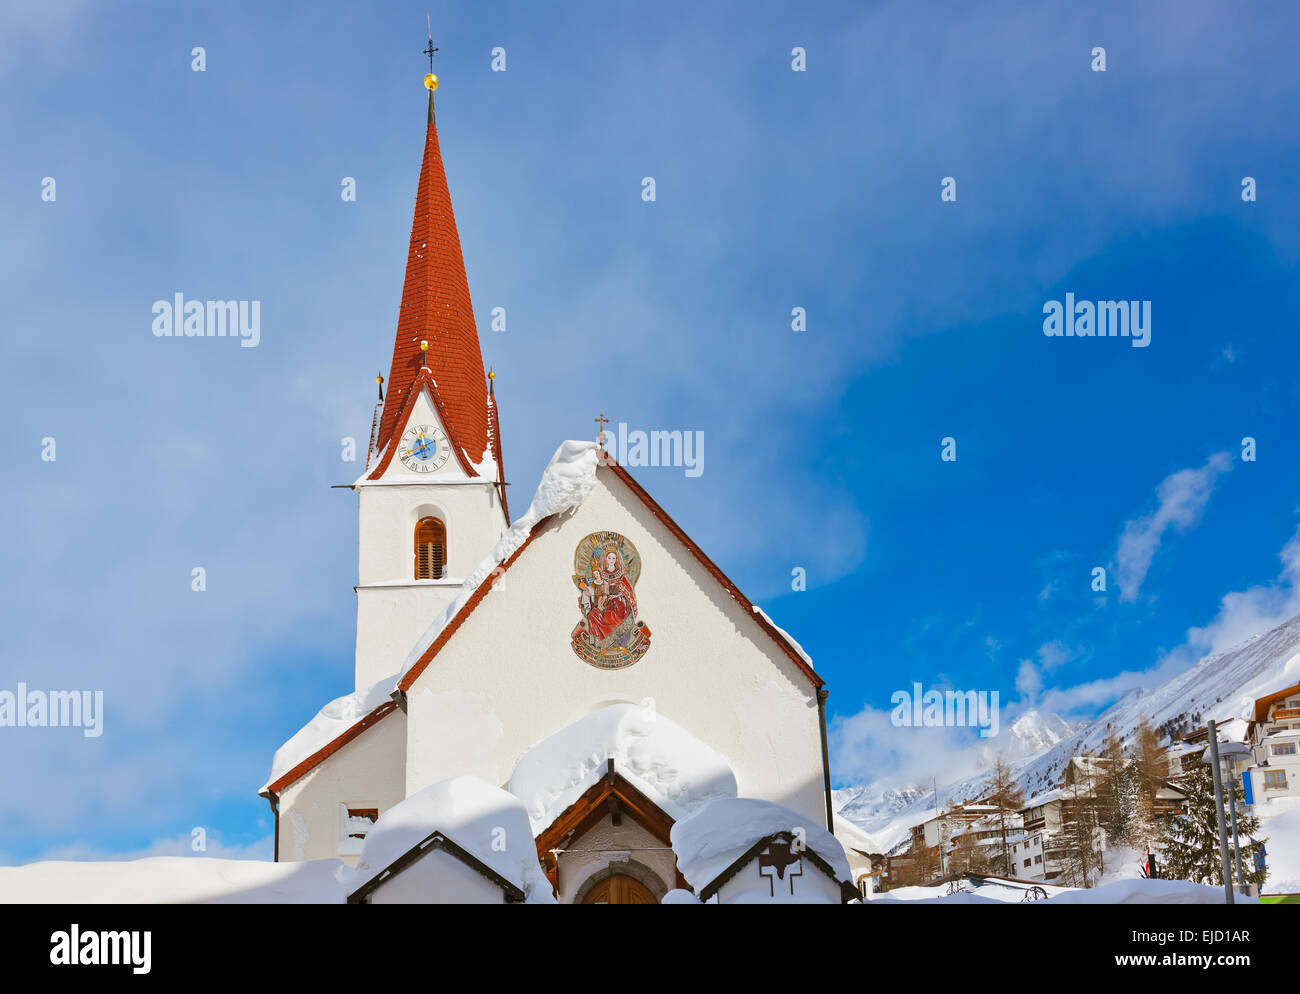 Mountain ski resort Obergurgl Austria Stock Photo